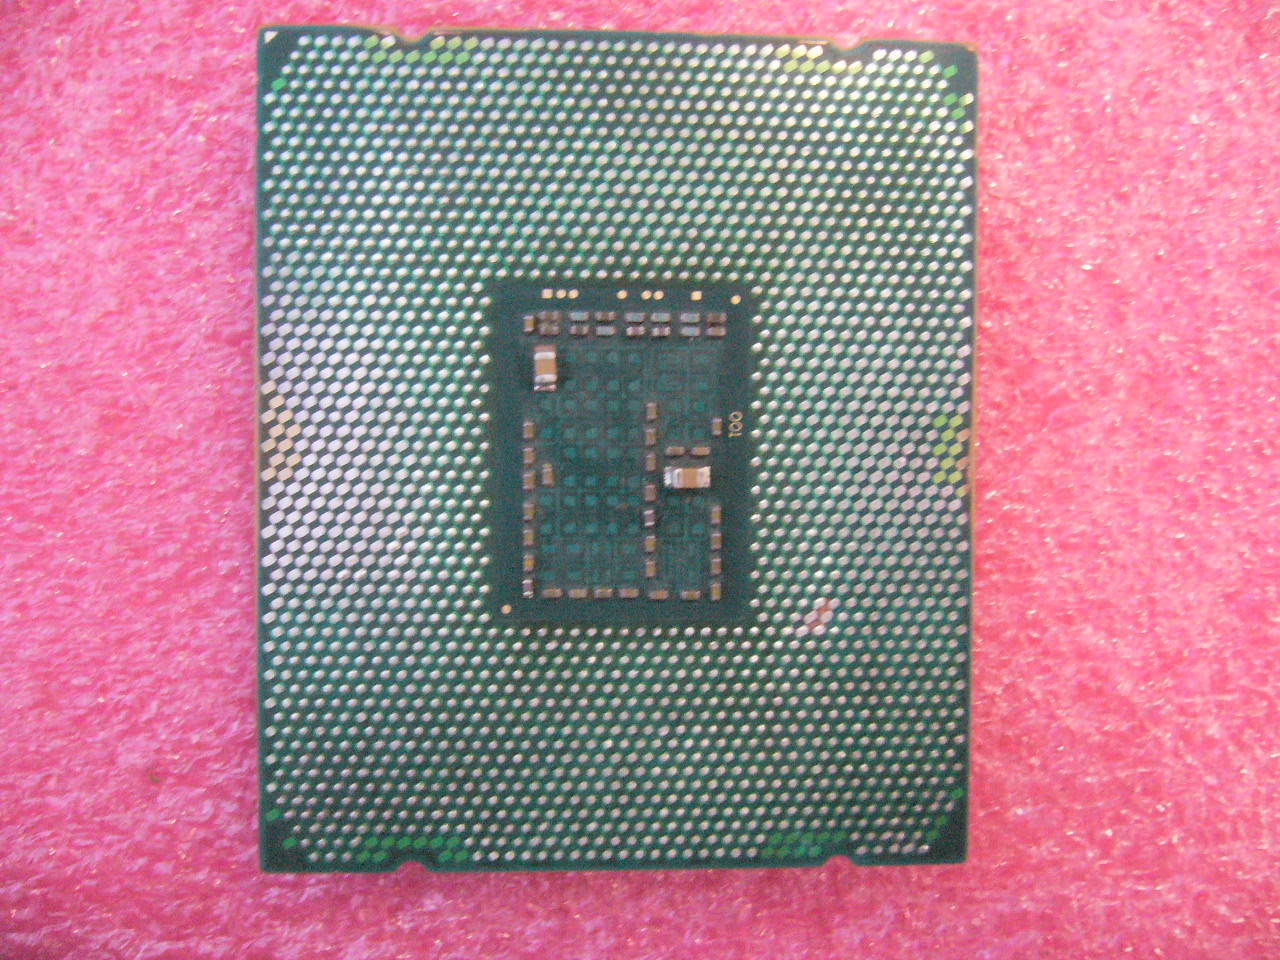 QTY 1x Intel Xeon CPU E5-2648LV3 12-Cores 1.8Ghz LGA2011 TDP 70W SR1XW - Click Image to Close